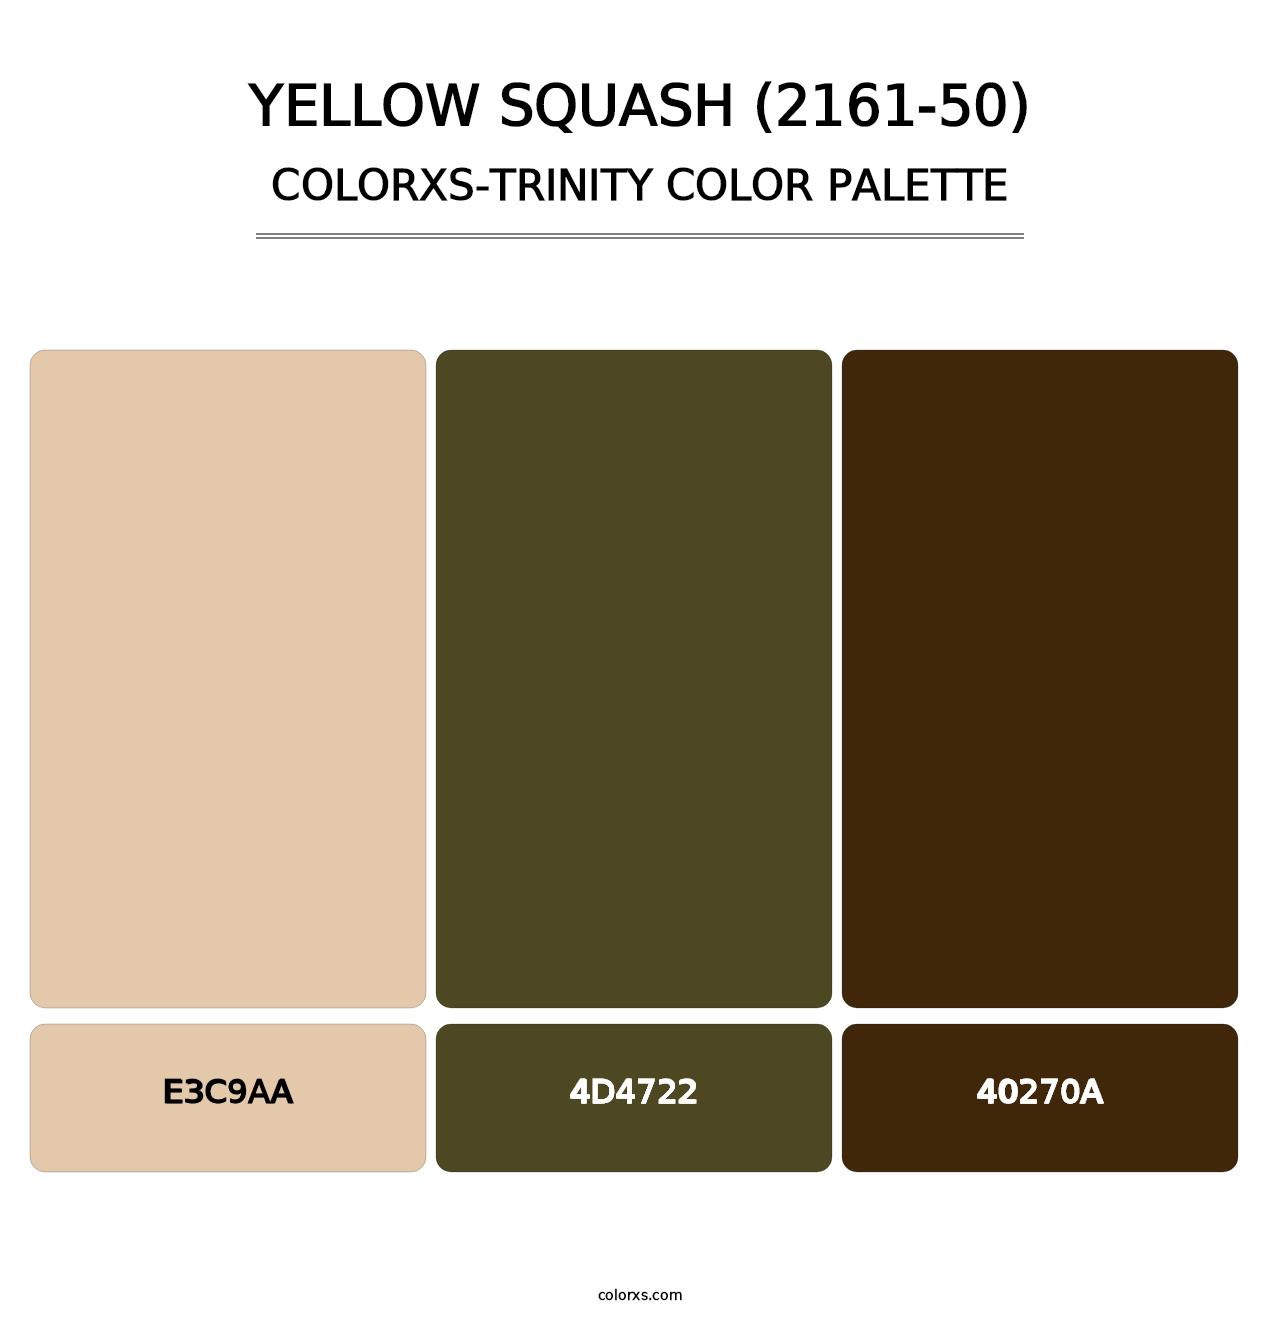 Yellow Squash (2161-50) - Colorxs Trinity Palette